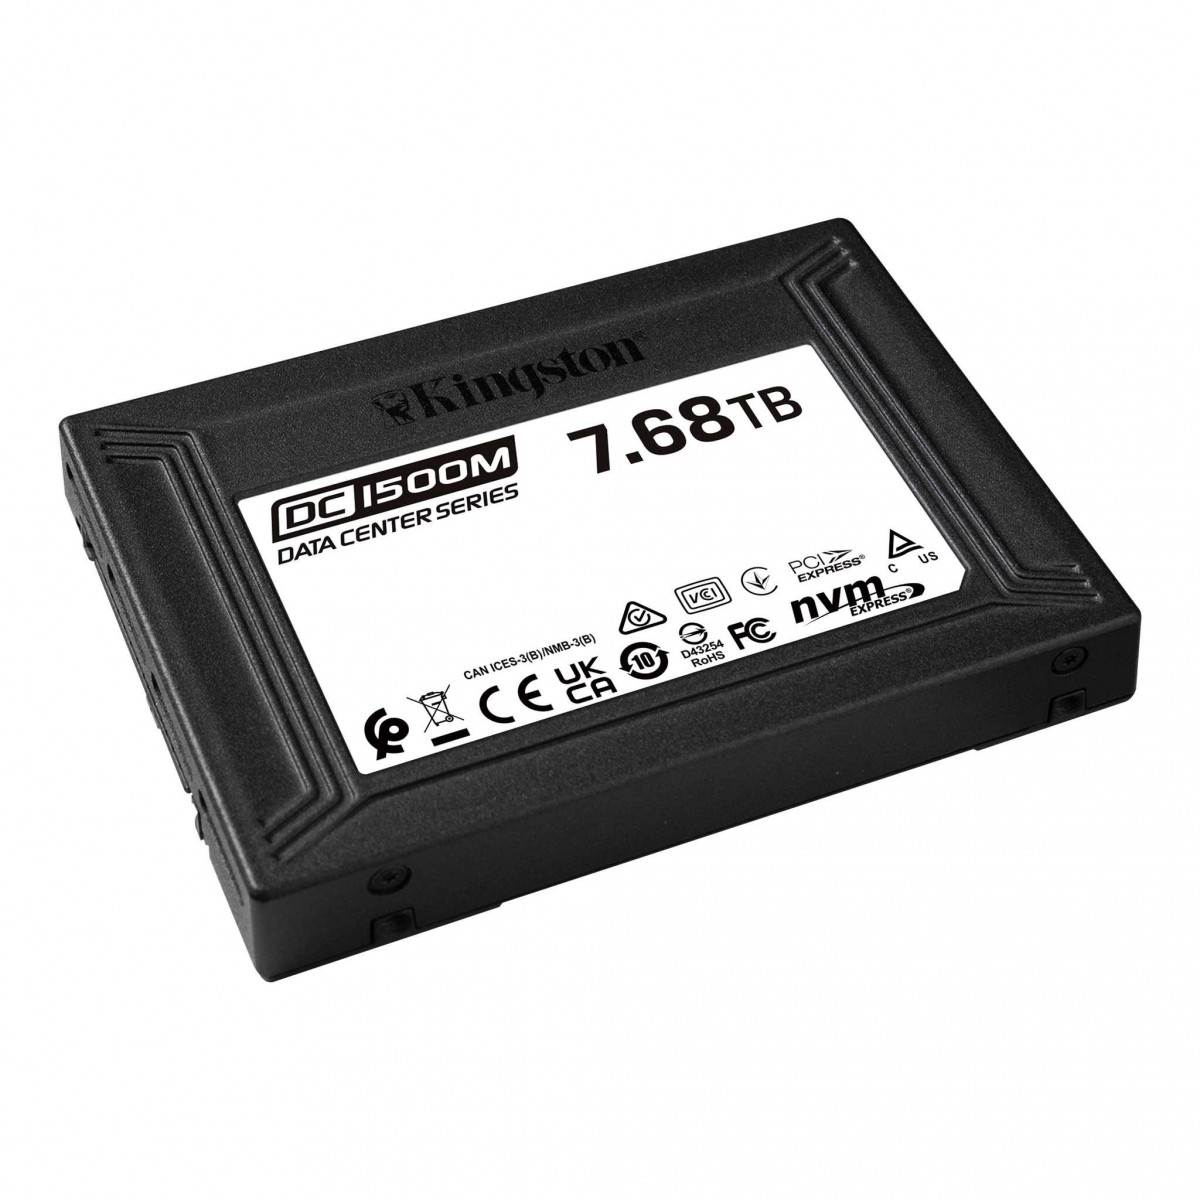 Kingston SSD 7680GB DC1500M U.2 NVMe - Solid State Disk - NVMe